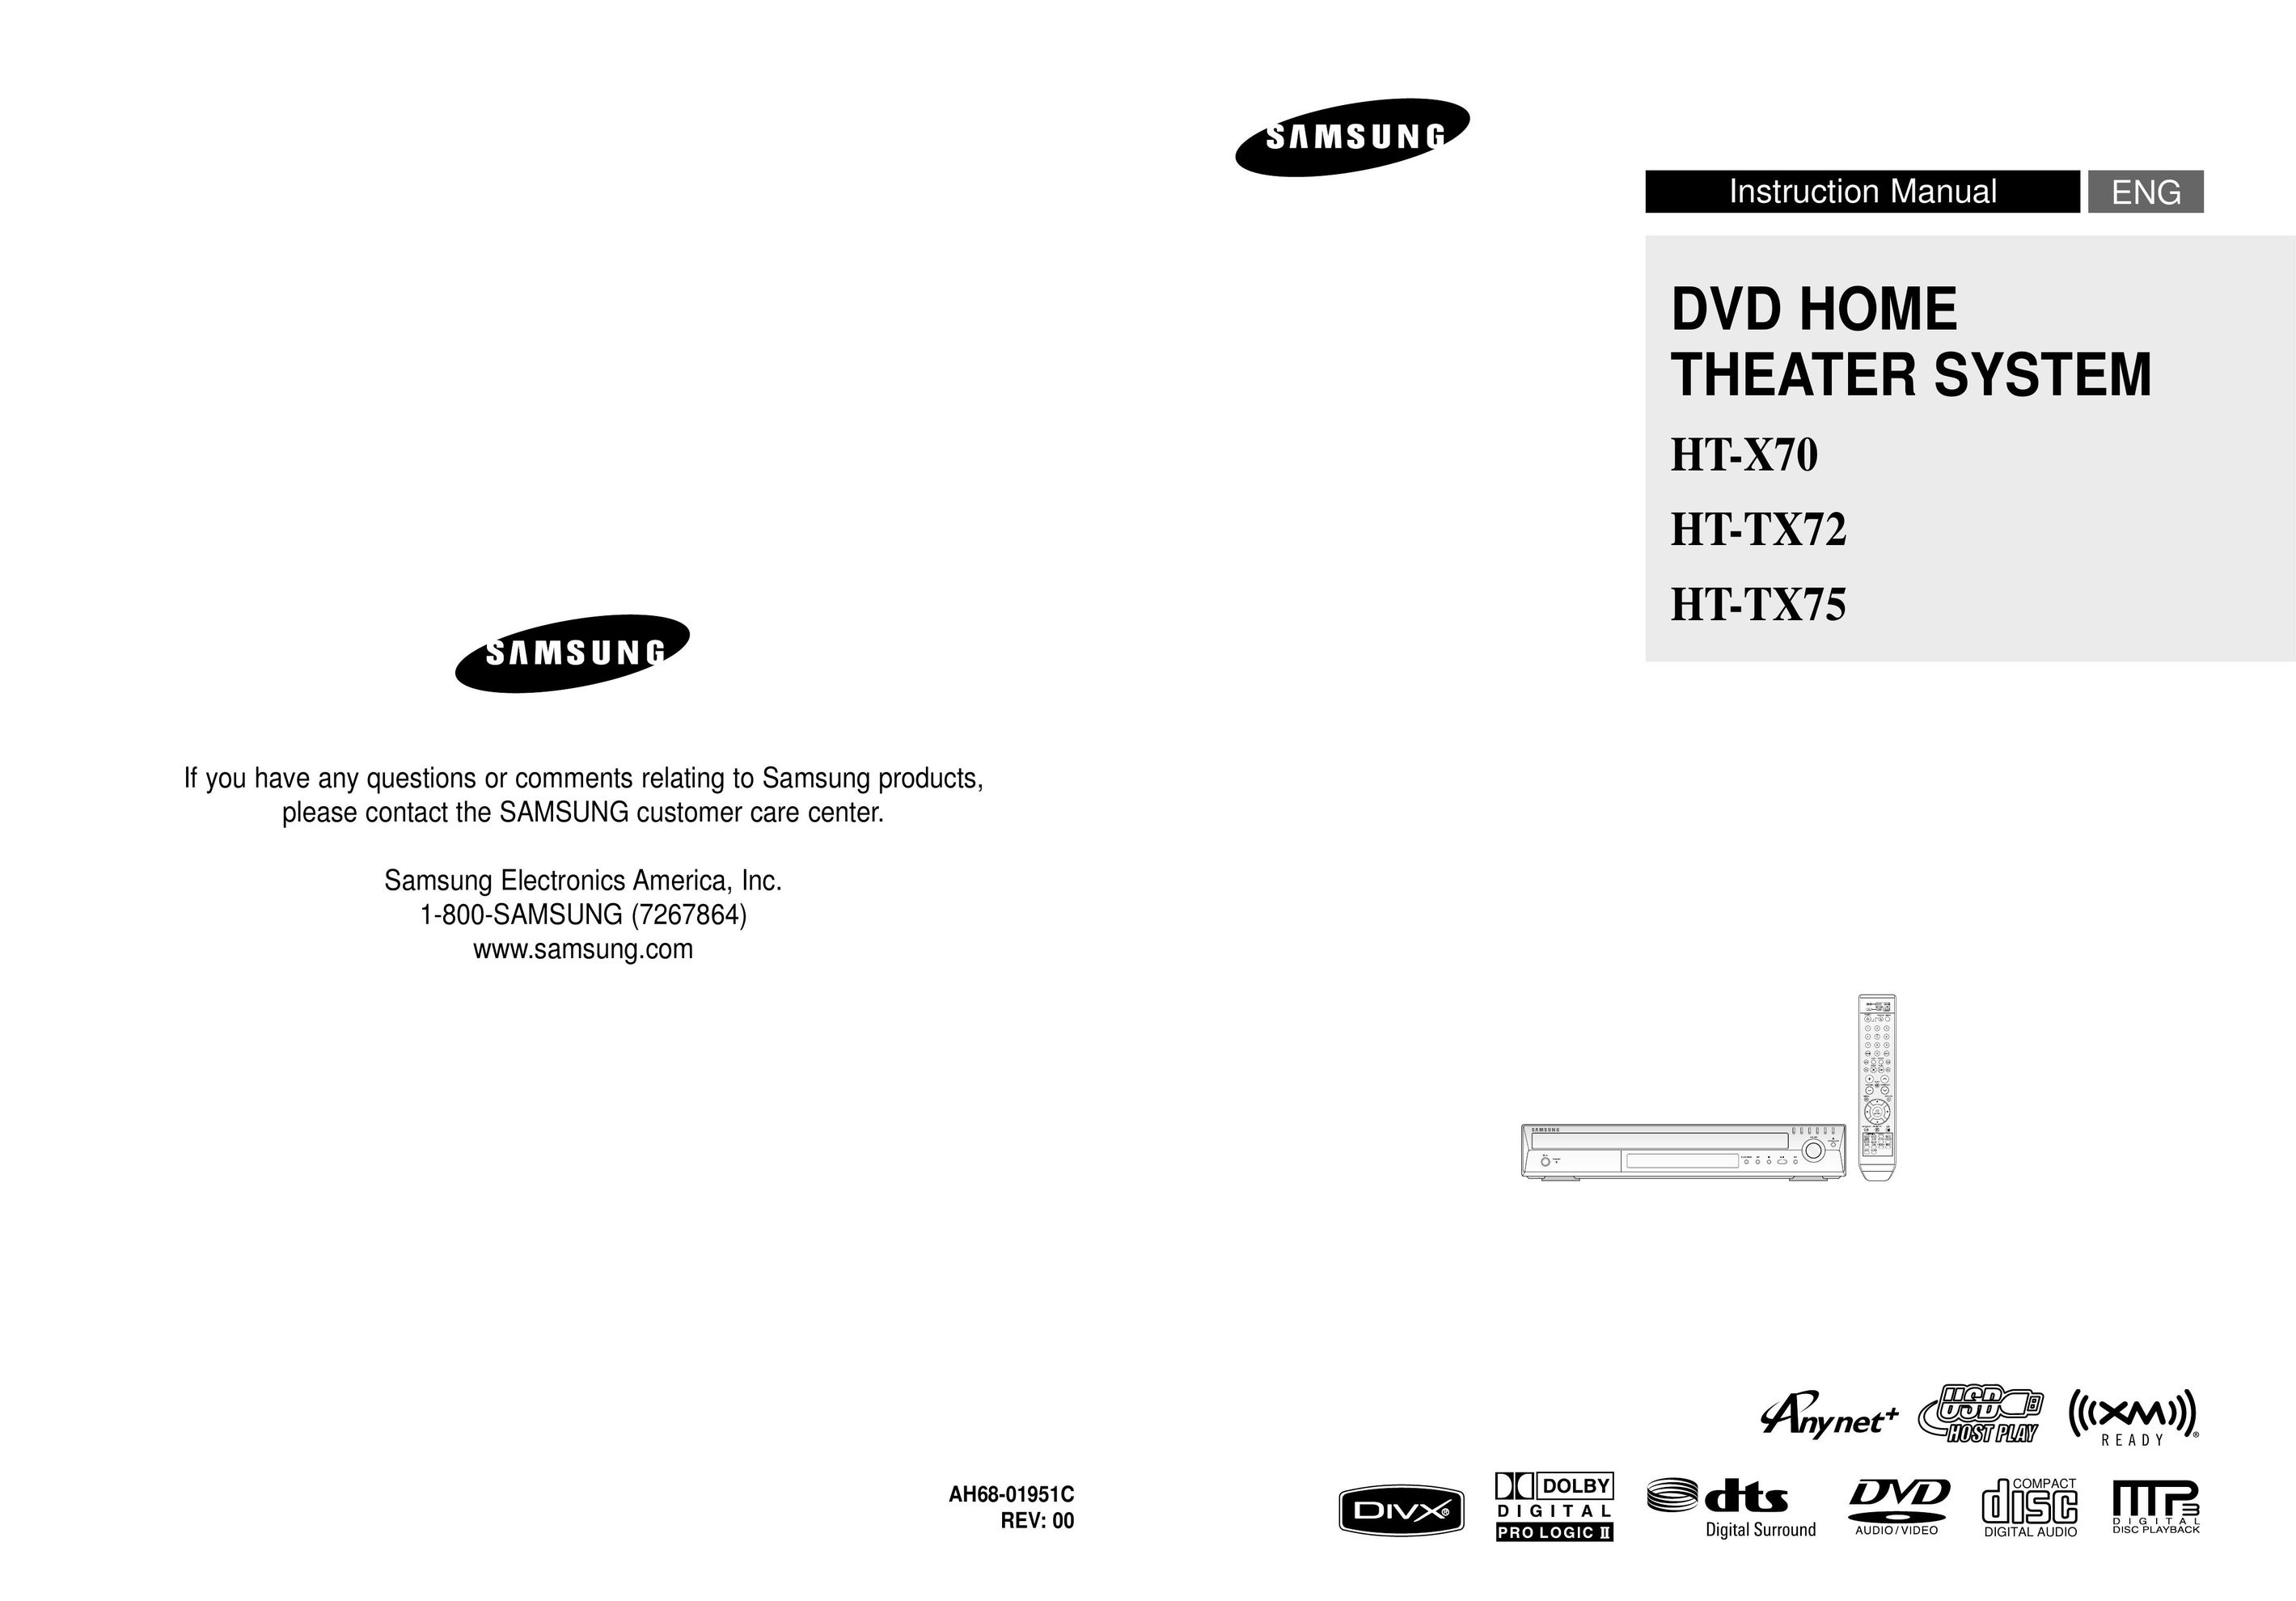 Sierra Wireless HT-TX72 DVD Player User Manual